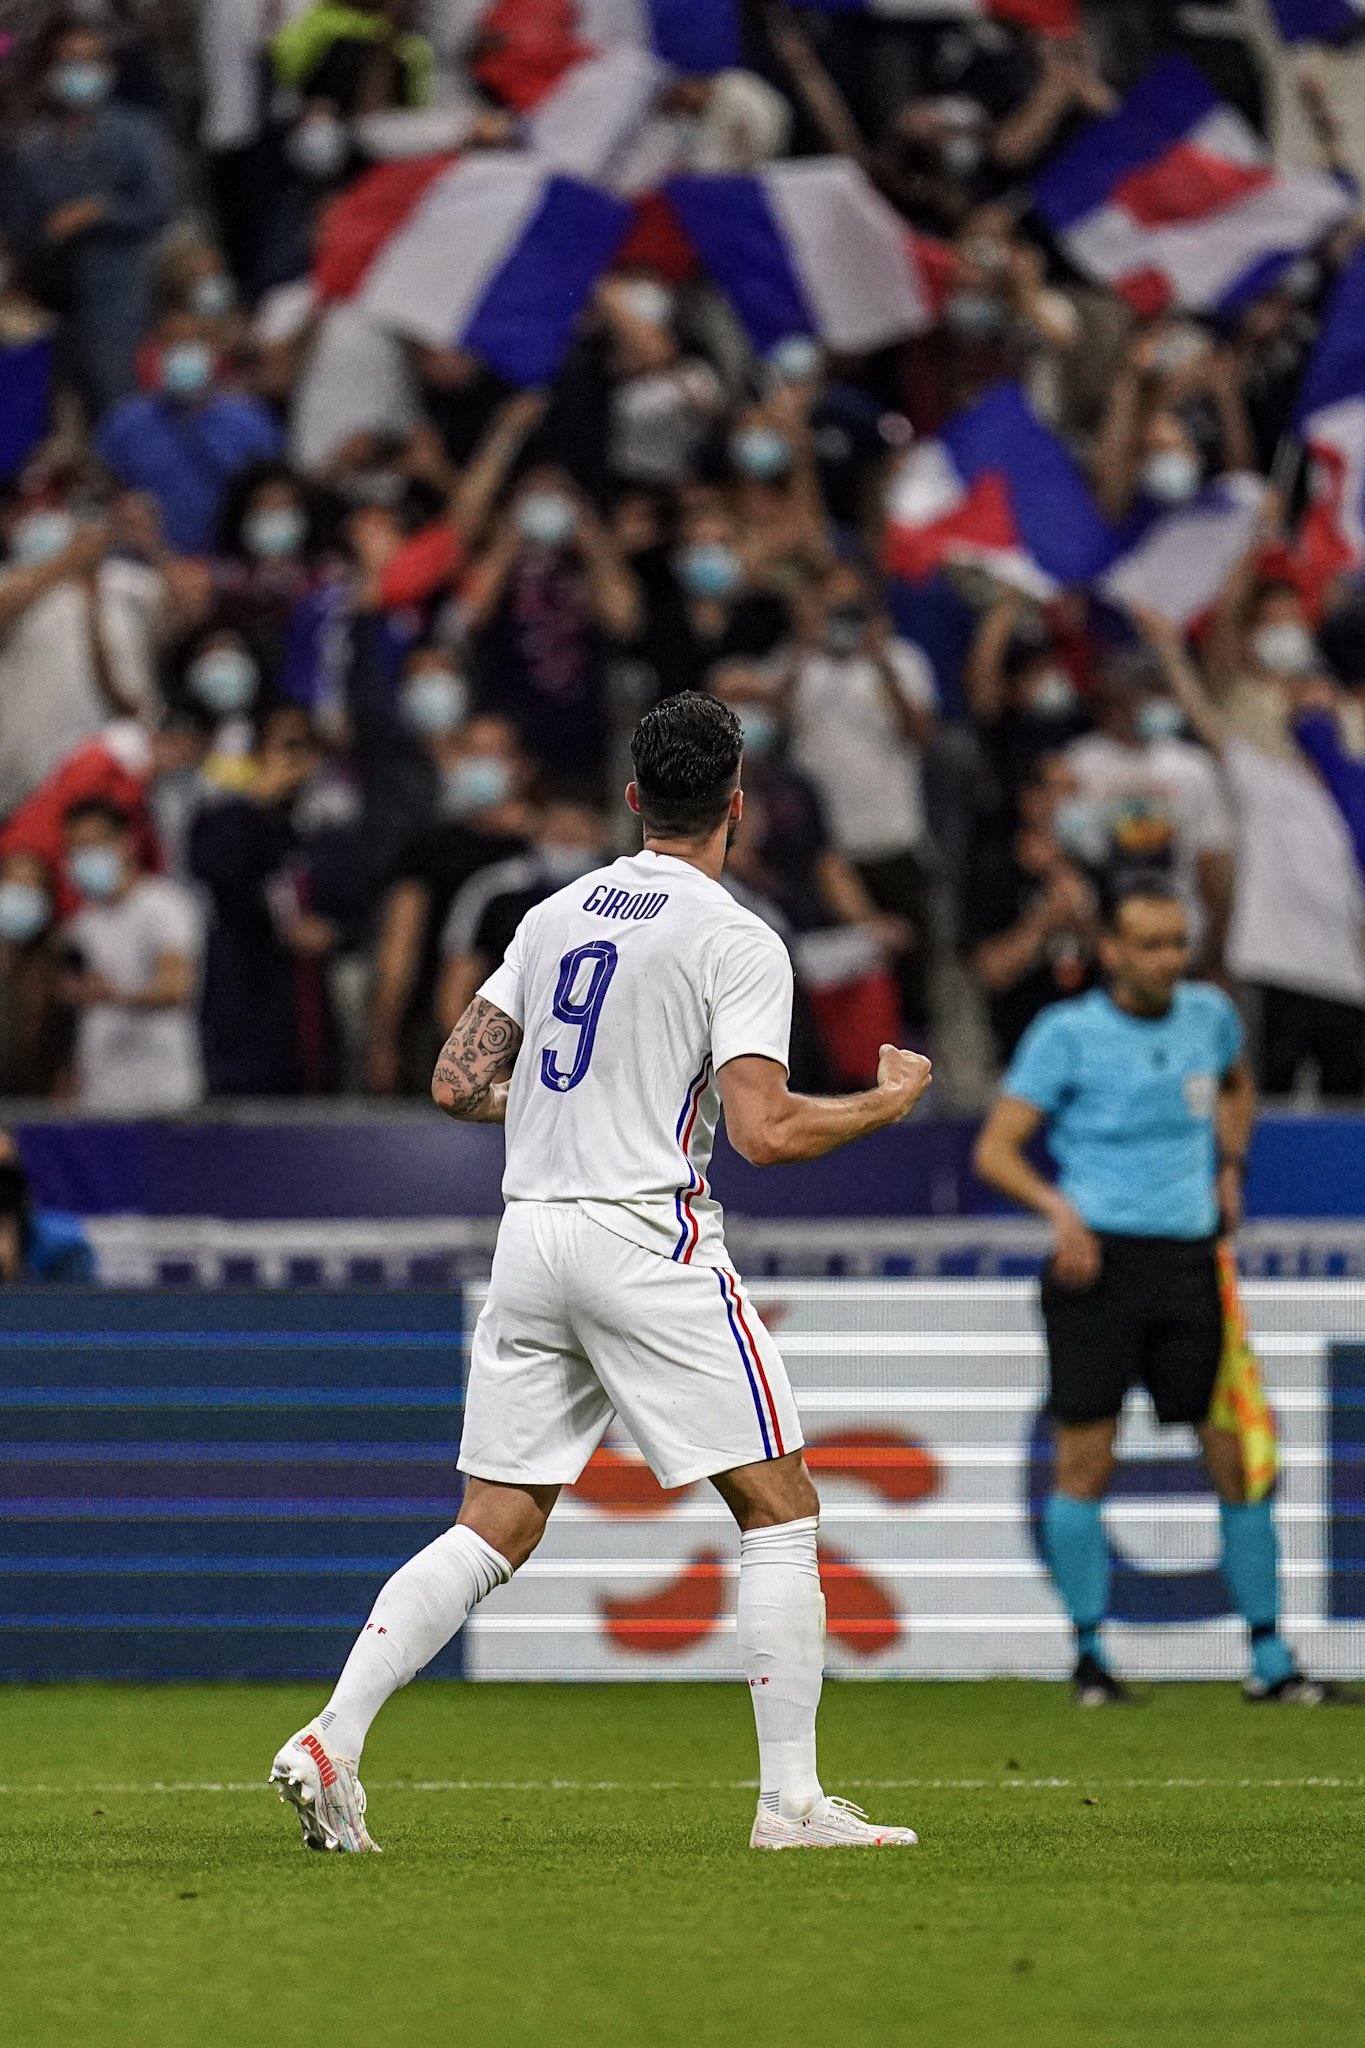 Karim Benzema Cedera, Giroud Cemerlang Jelang Piala Eropa